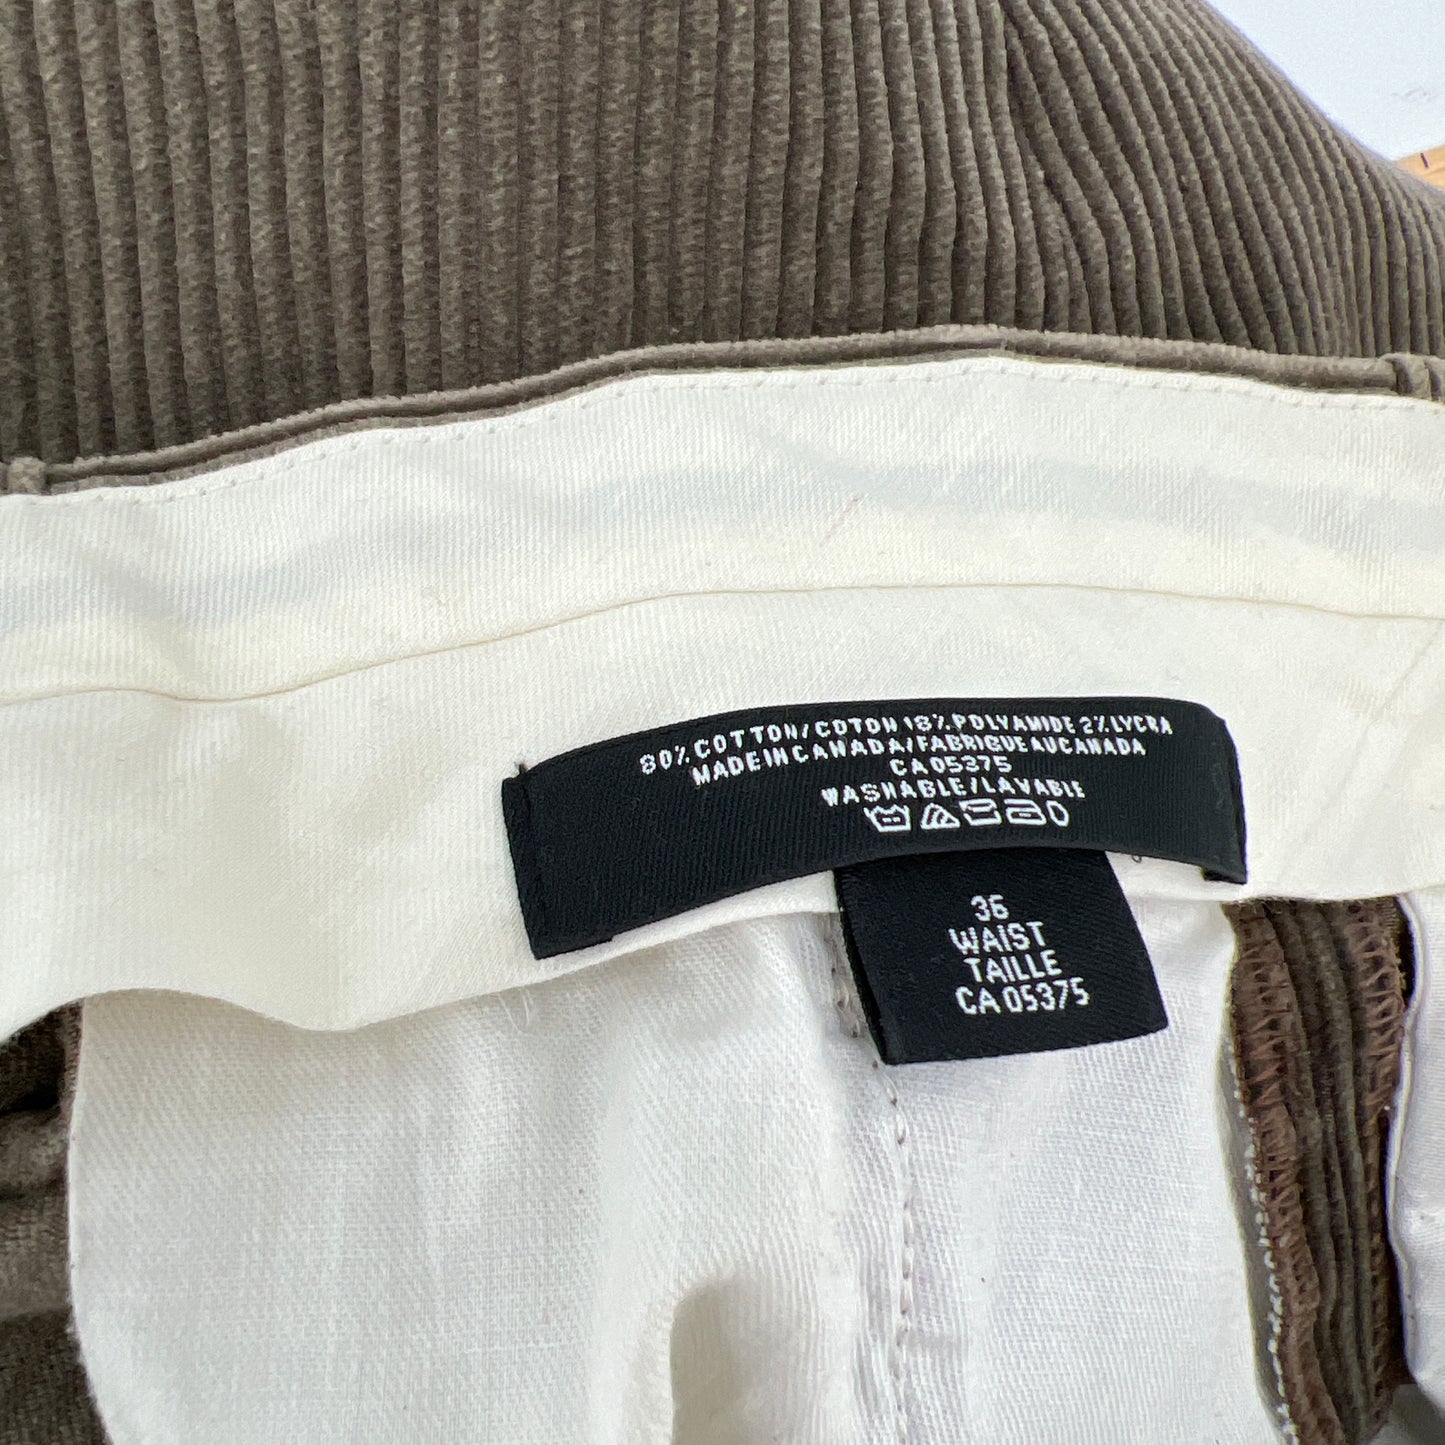 SOLD - Vintage Lineage Corduroy Pants 36W